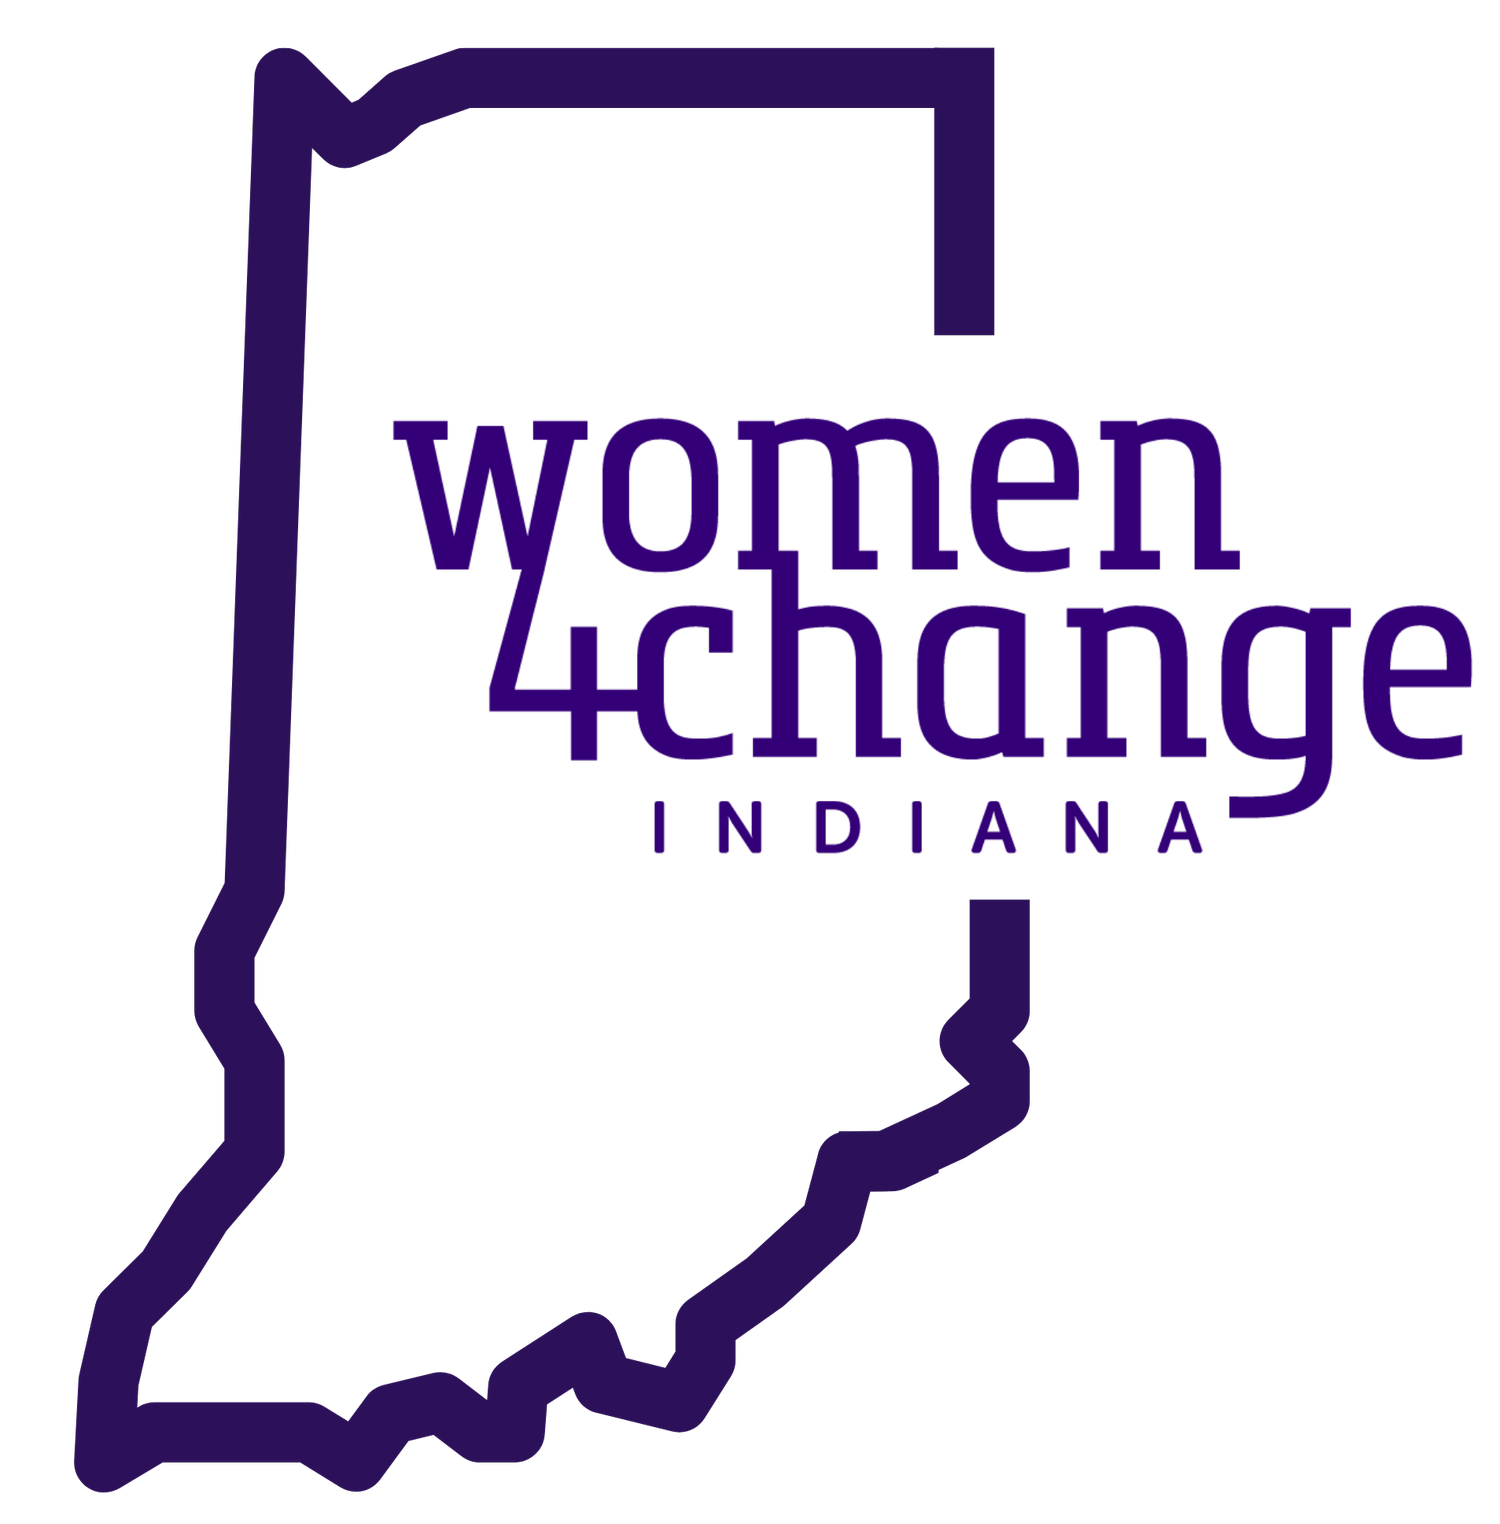 Women4Change Indiana